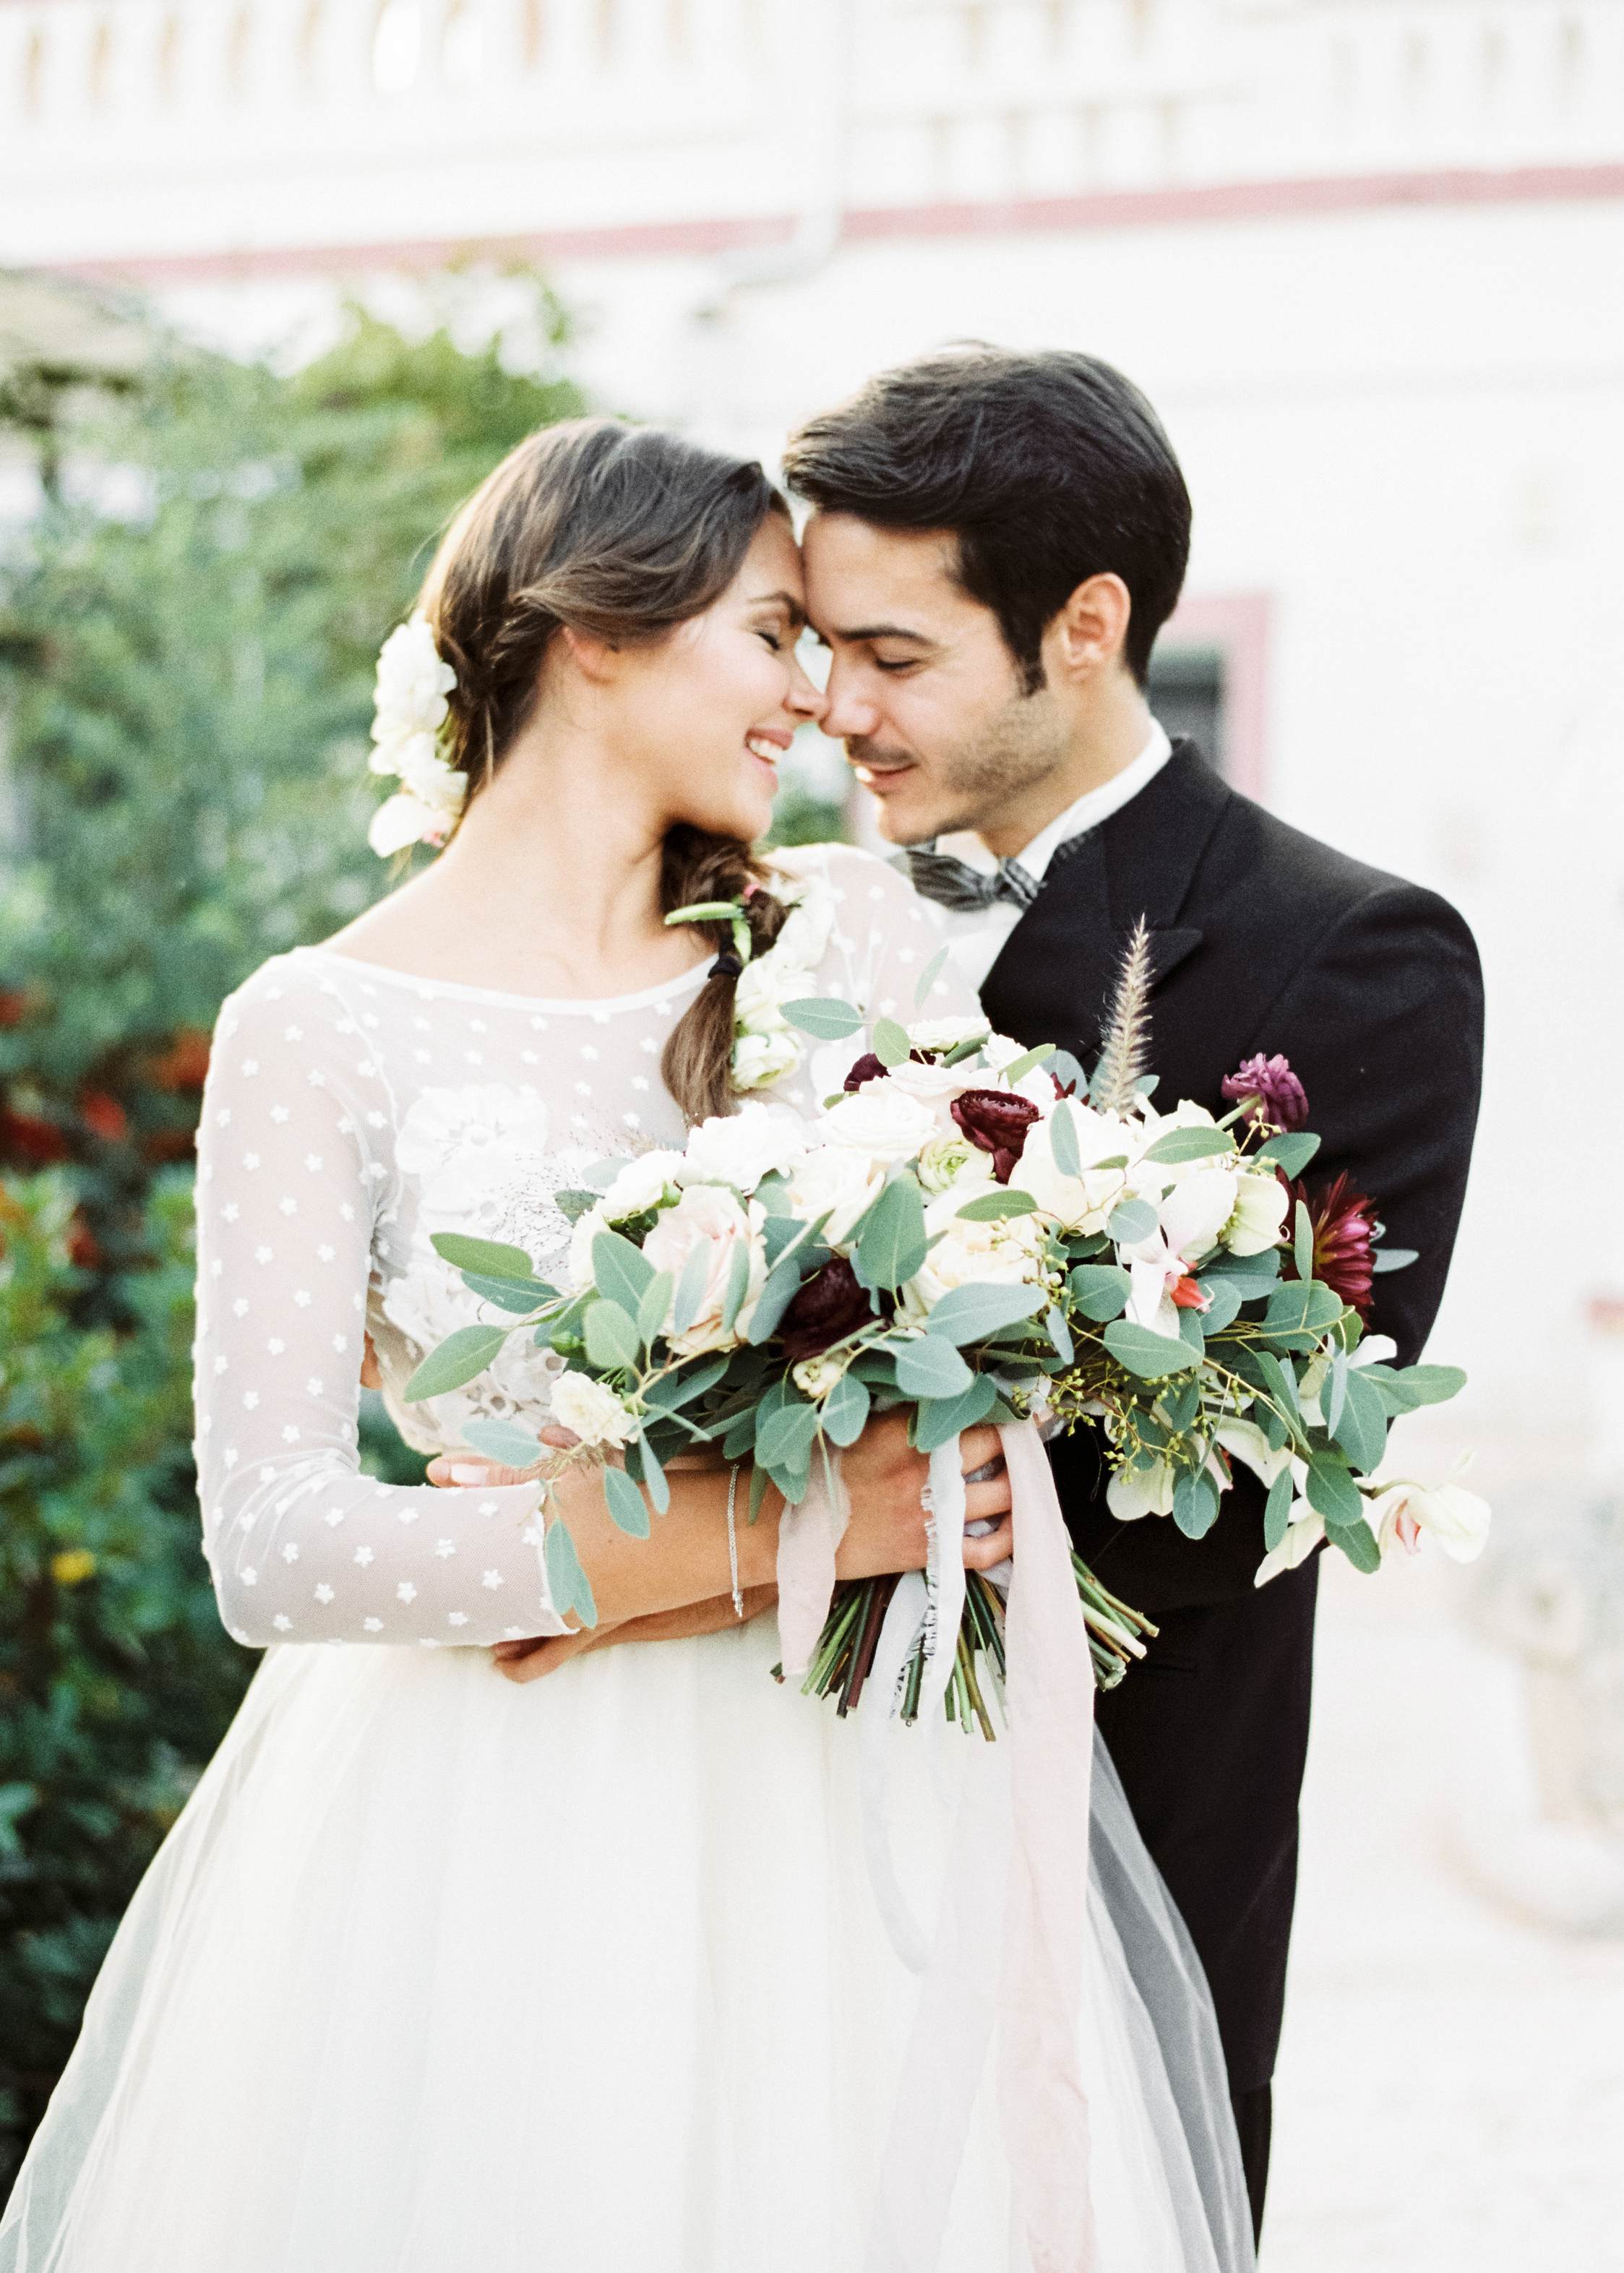 Wedding photographer Masseria Montenapoleone Italy - Couple shoot